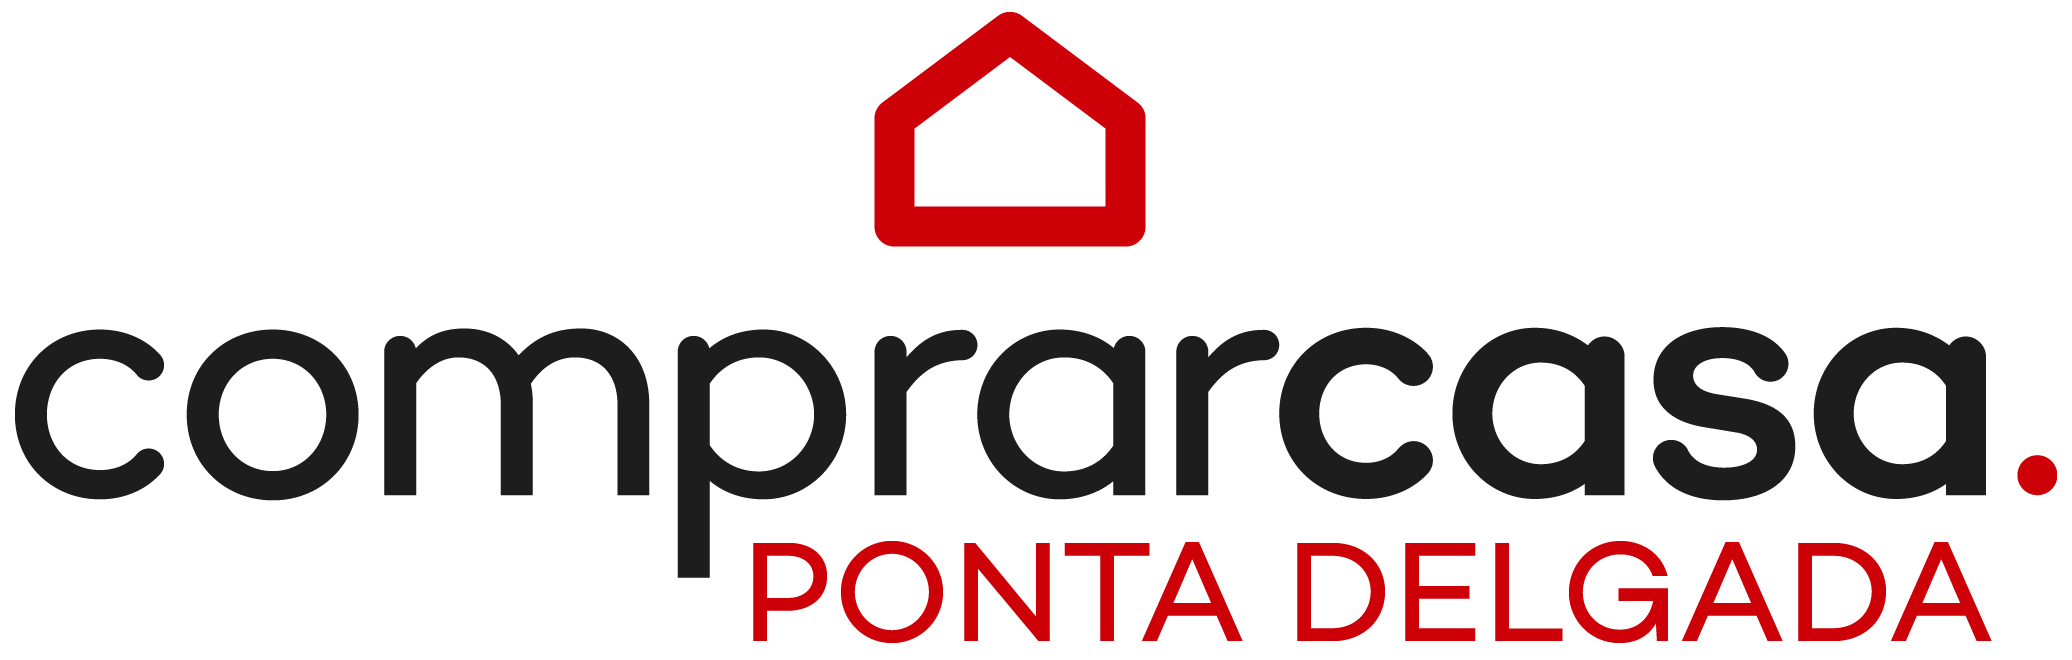 ComprarCasa Ponta Delgada - Agent Contact